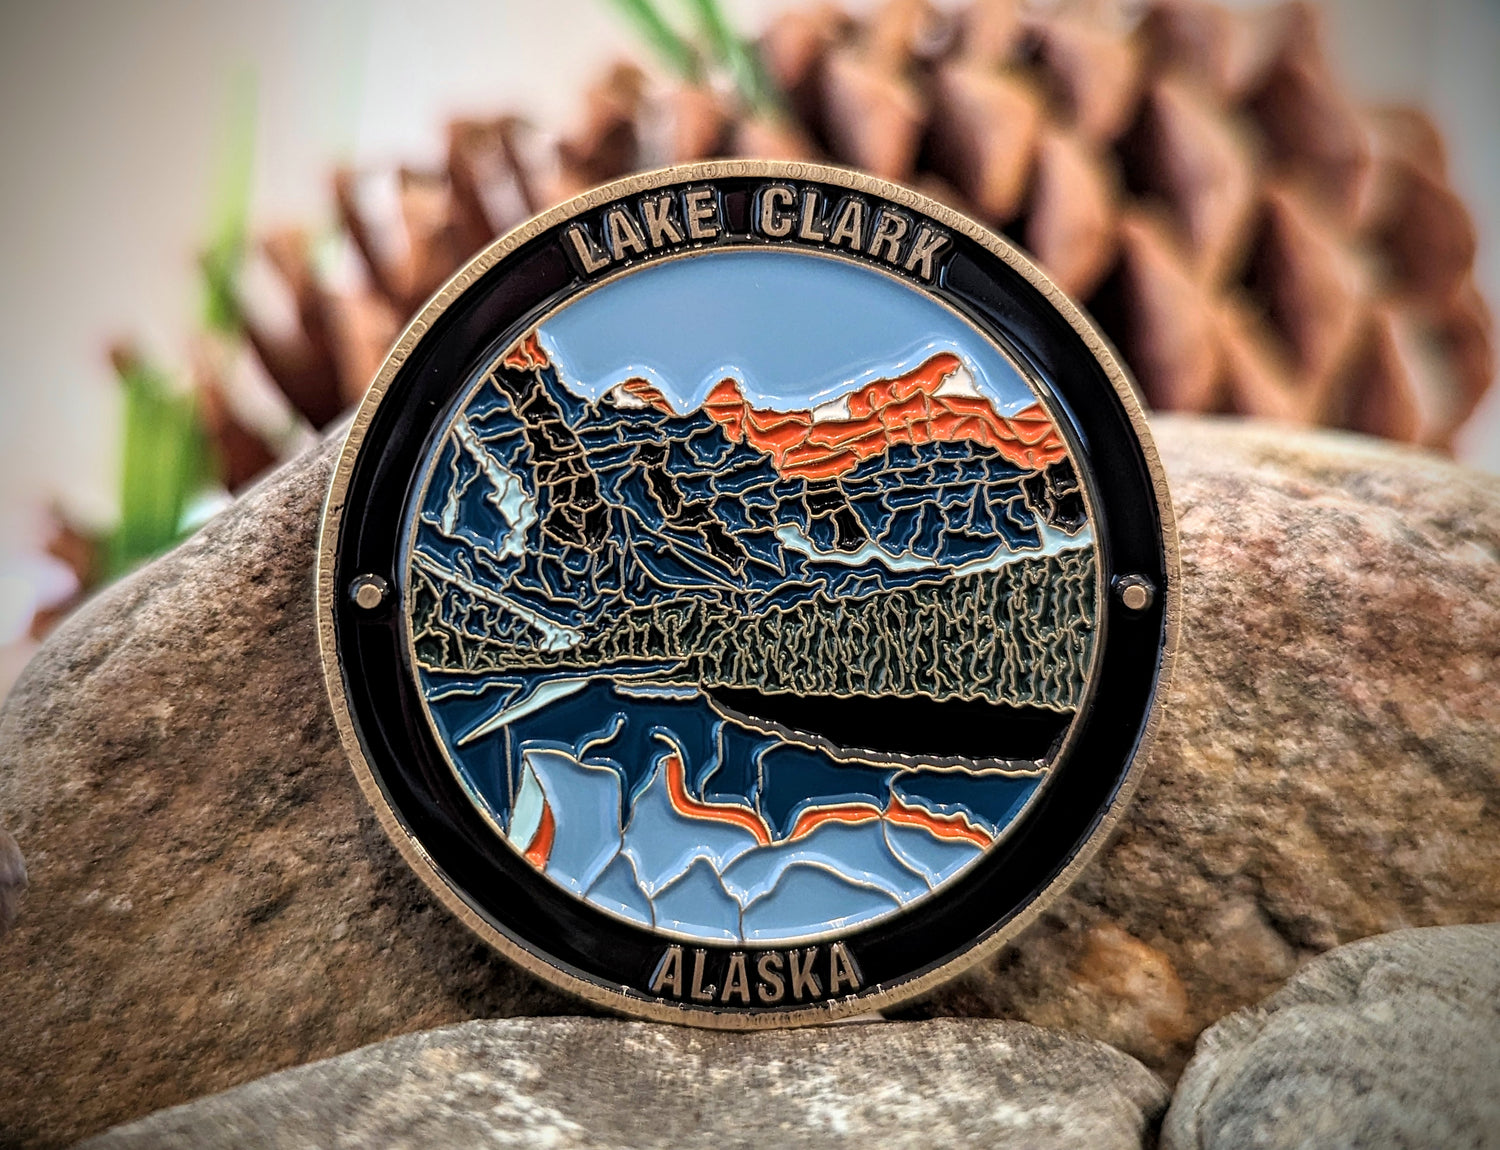 LAKE CLARK NATIONAL PARK CHALLENGE COIN